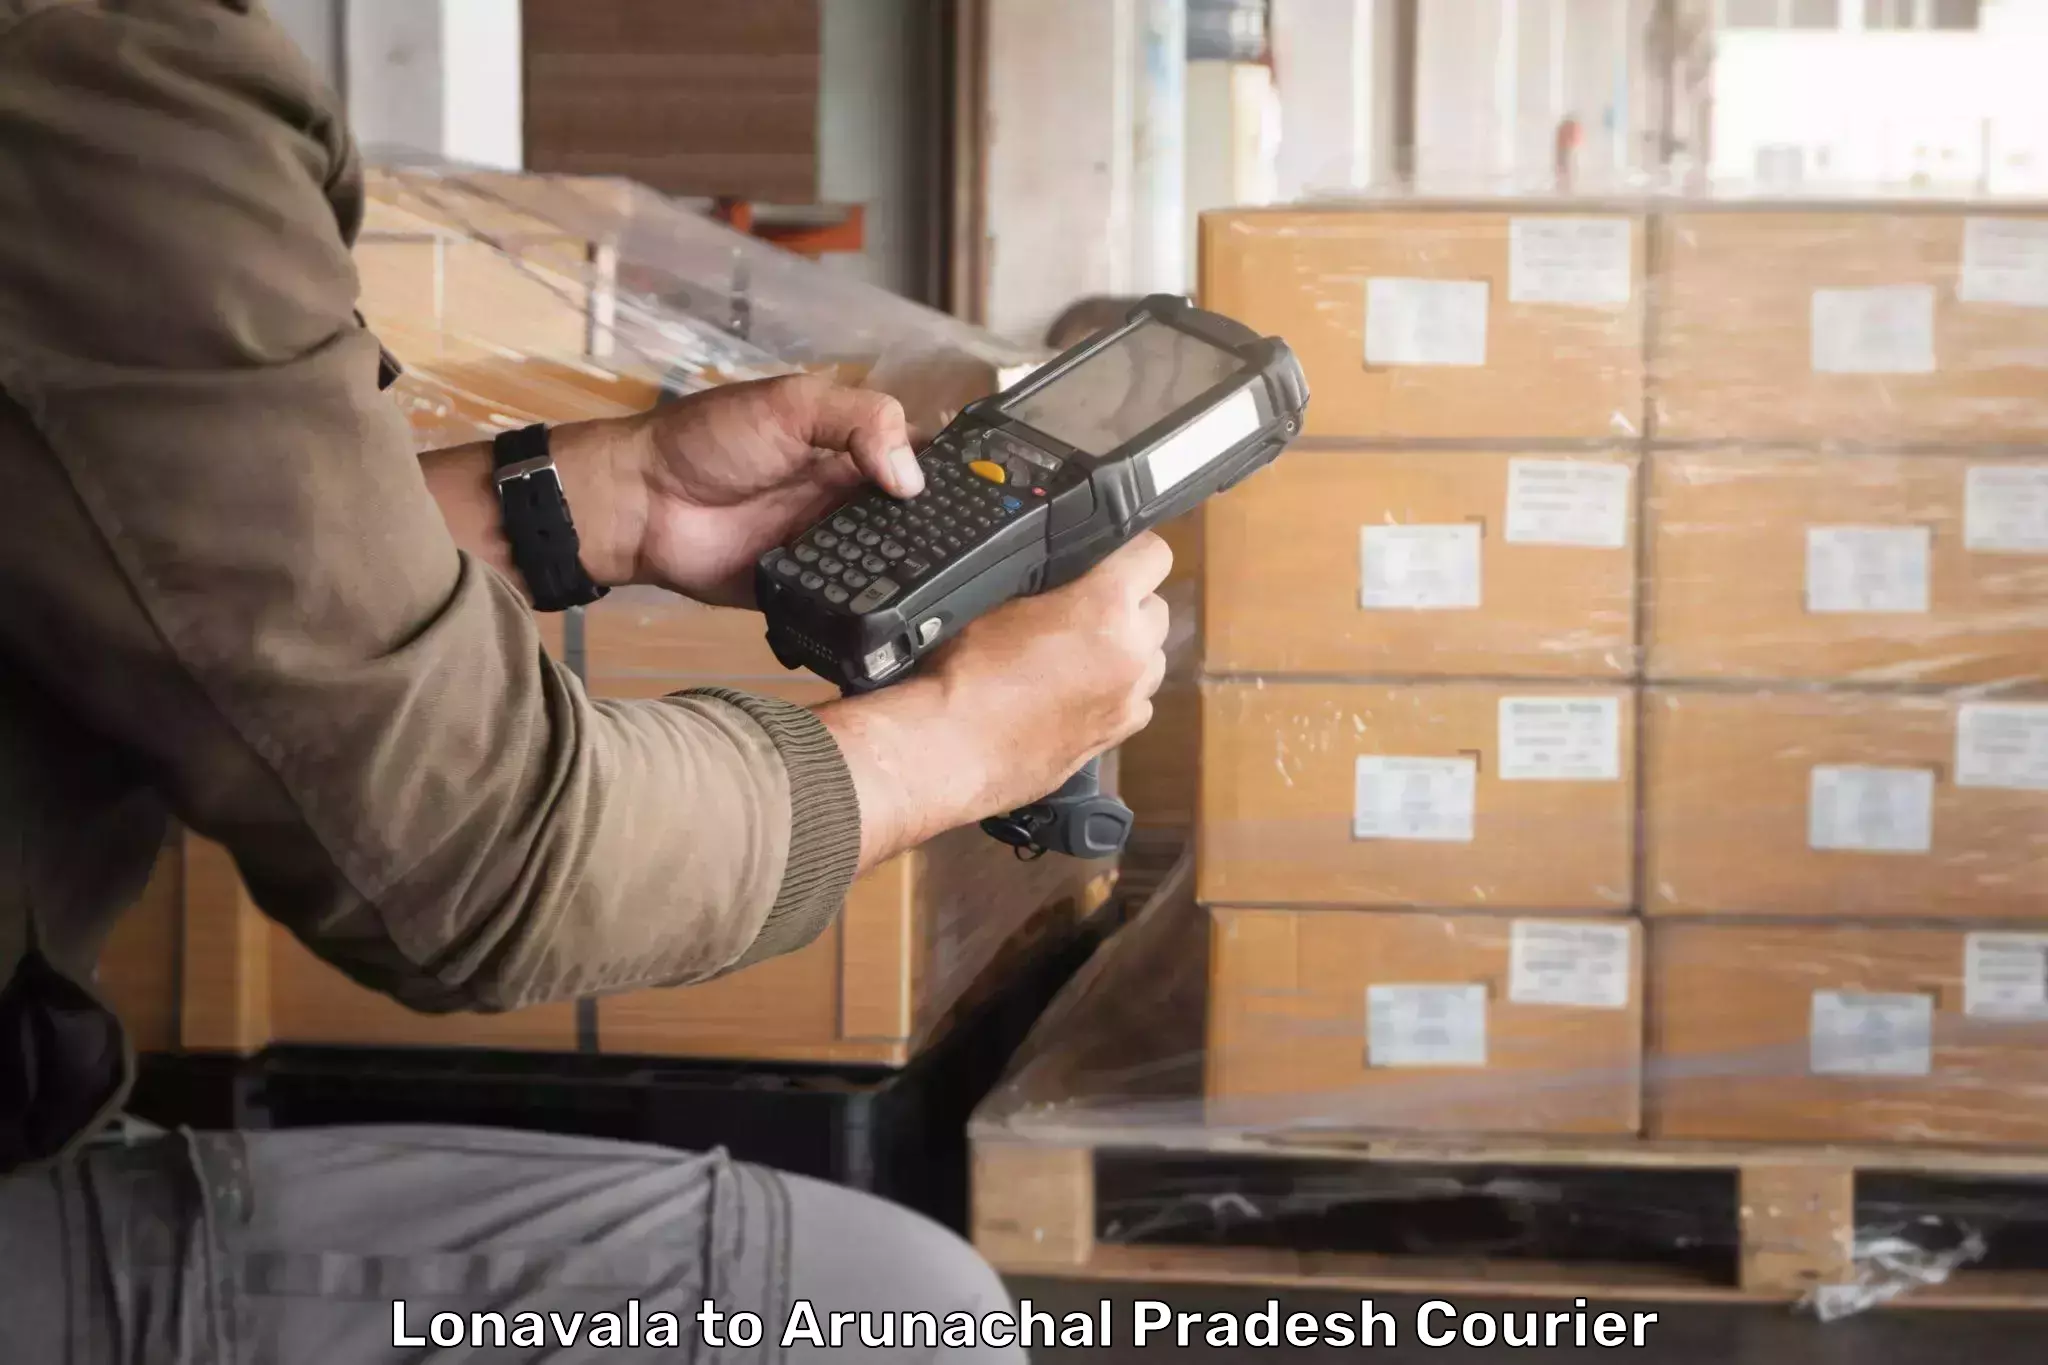 Global logistics network Lonavala to Arunachal Pradesh